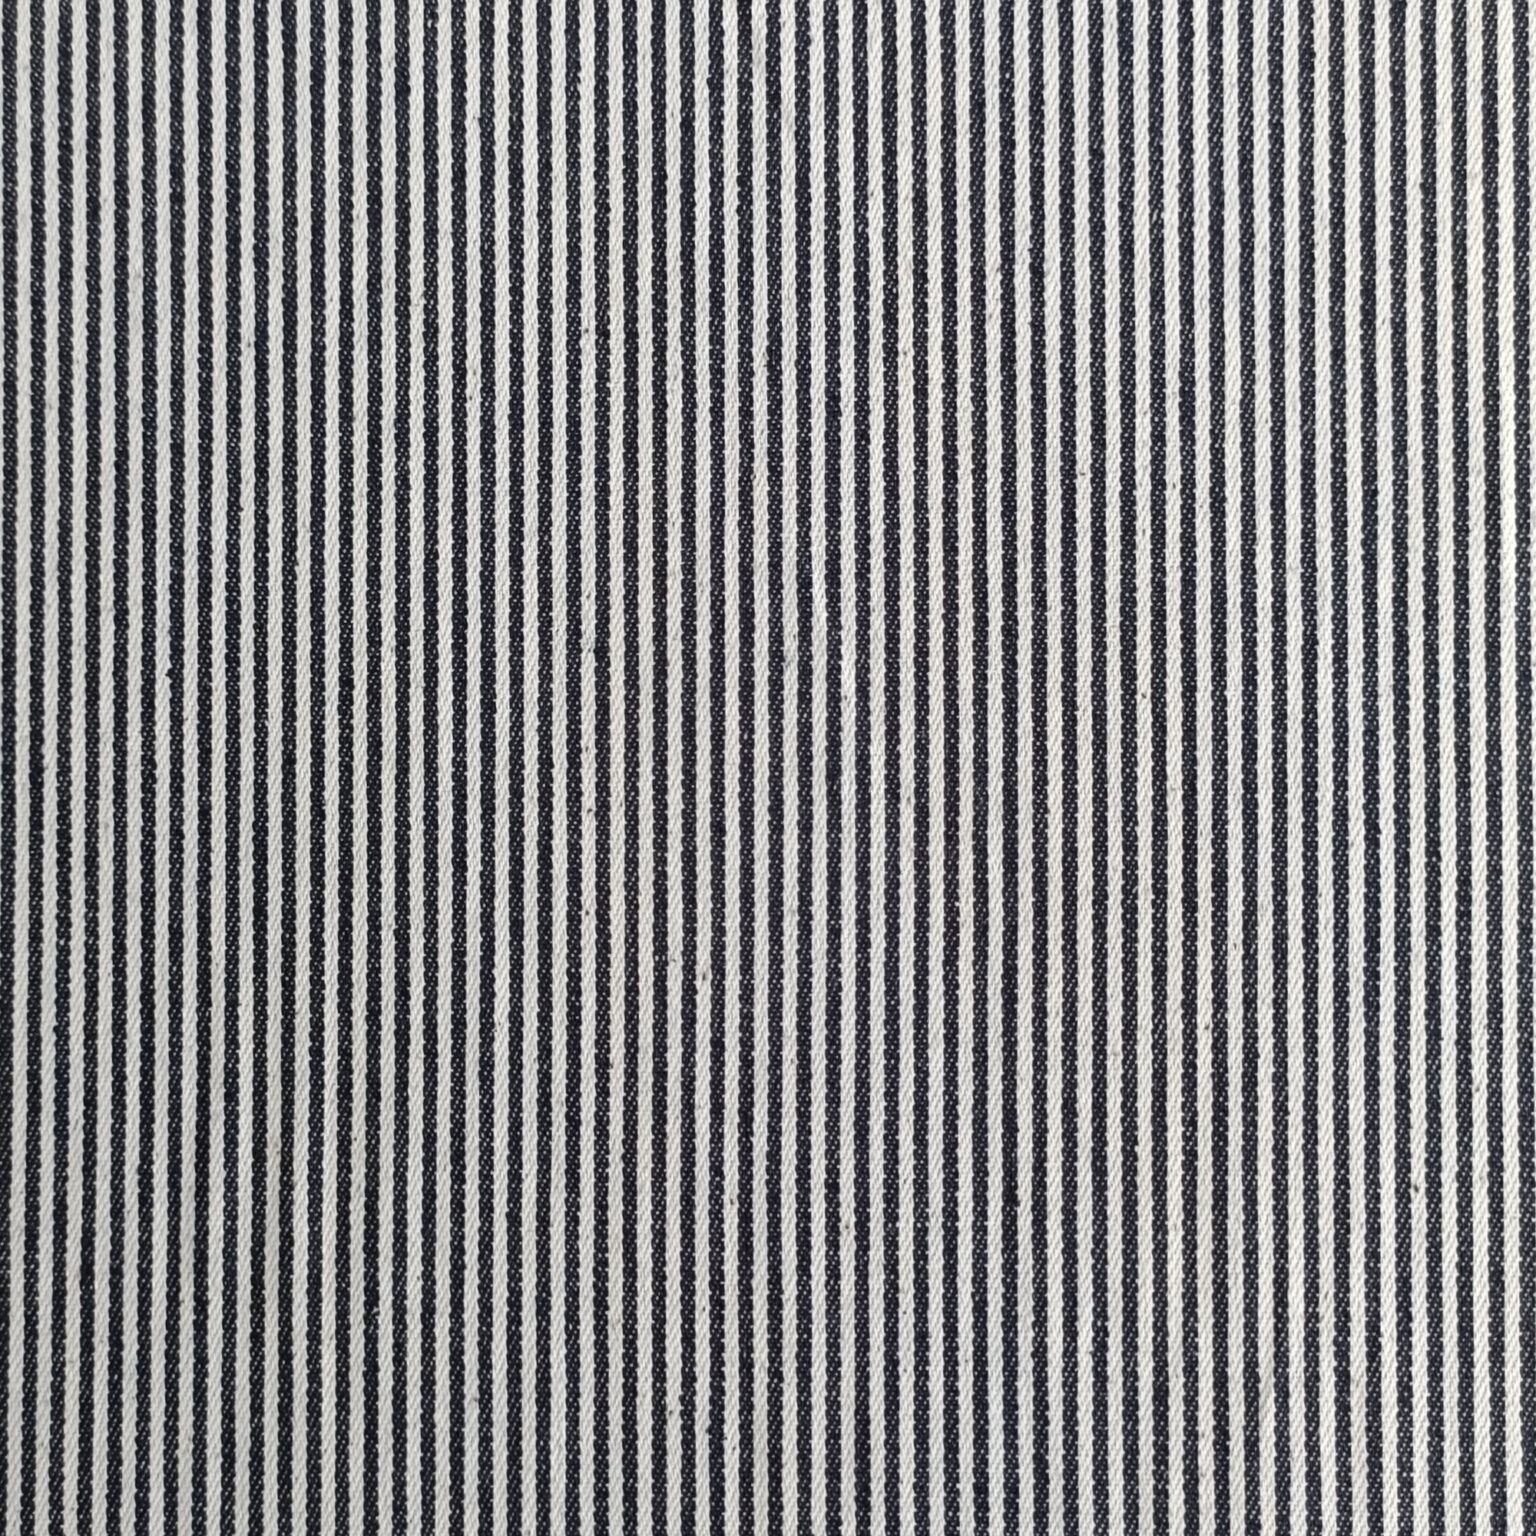 Striped Denim Blue Fabric - Lightweight Cotton - 155cm Wide